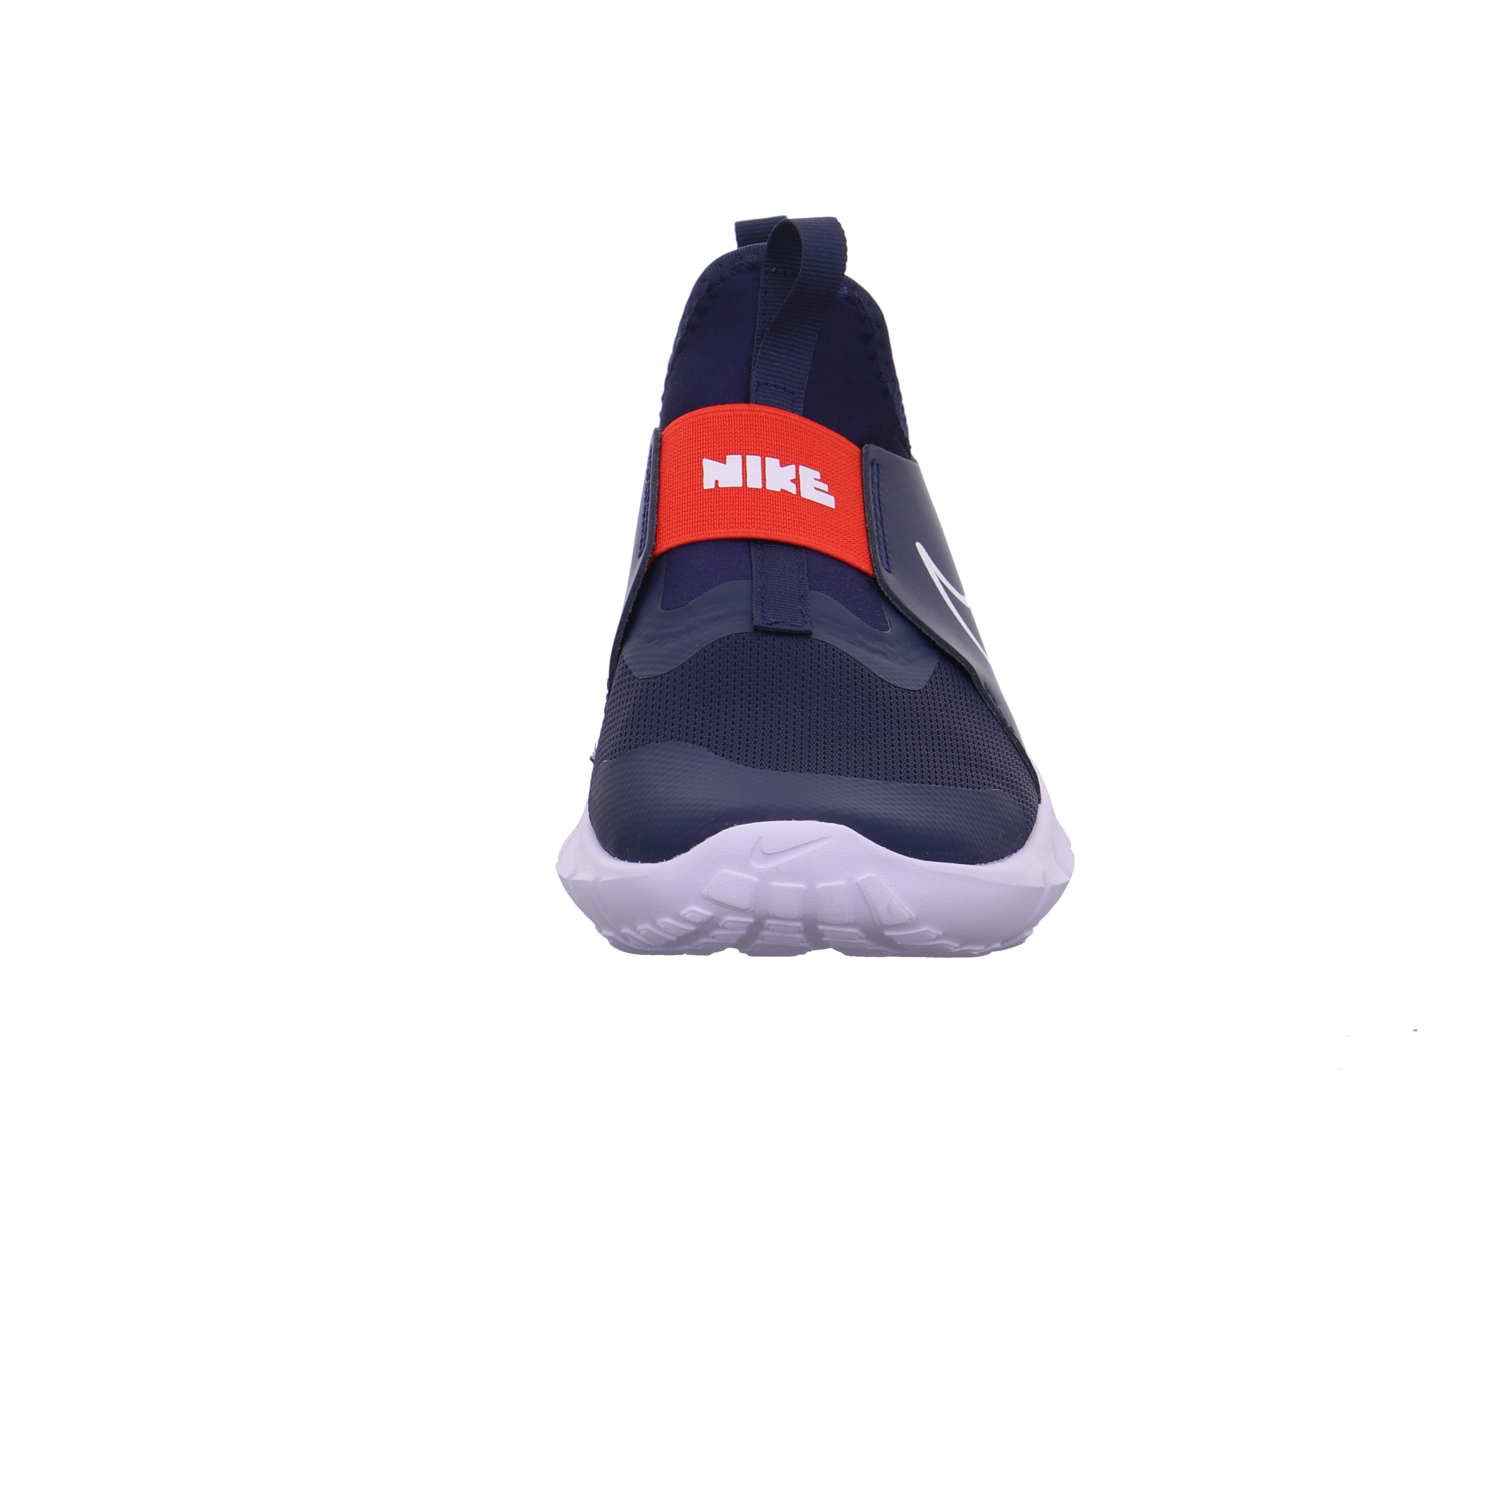 Nike Nike Flex Runner 2 Big Kids blau kombi Bild3